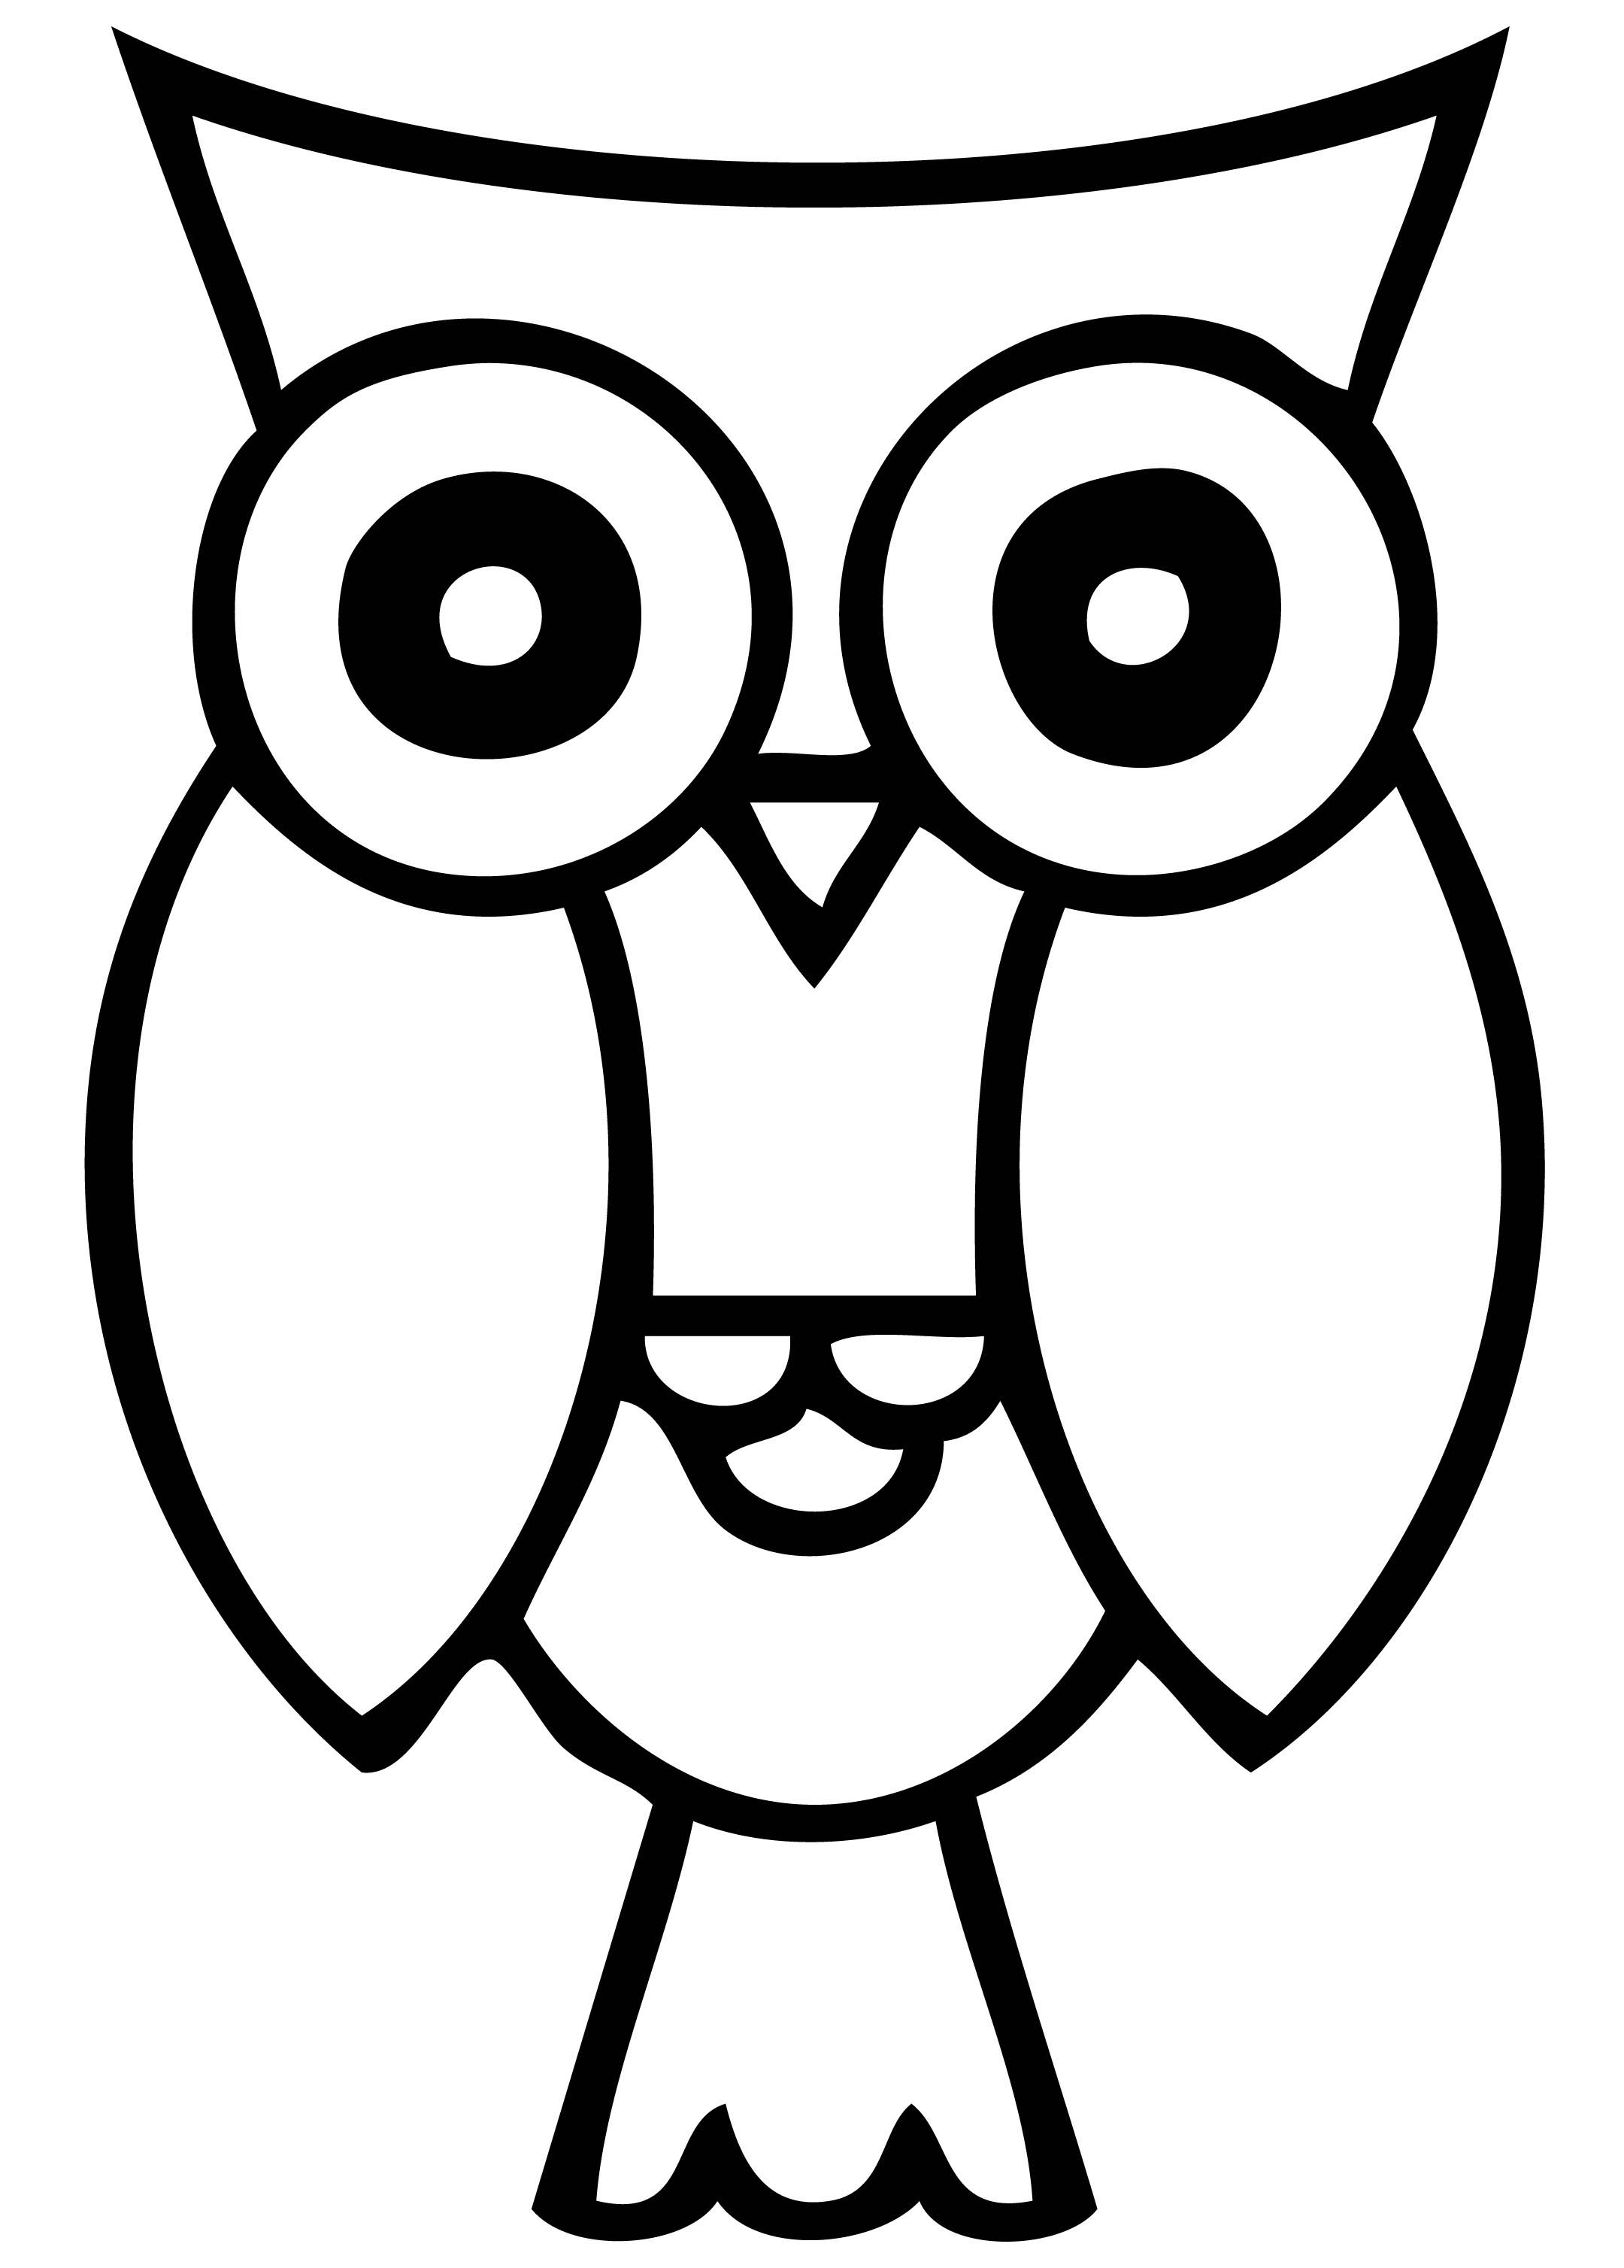 Owl eye clipart black and white